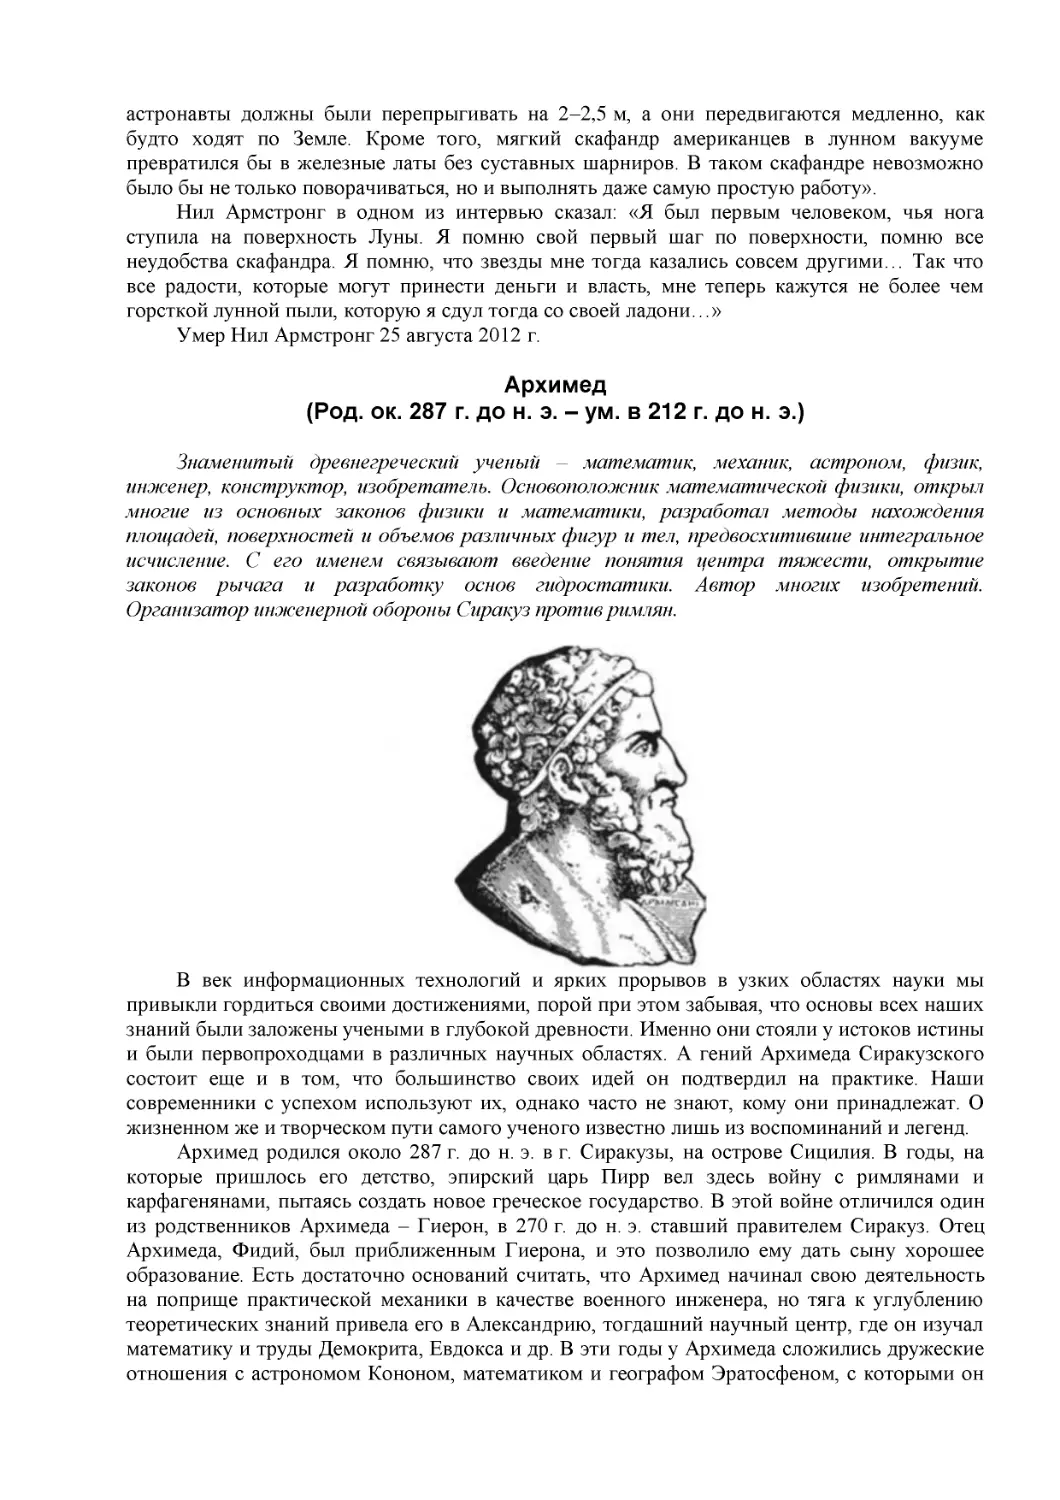 Архимед
(Род. ок. 287 г. до н. э. – ум. в 212 г. до н. э.)